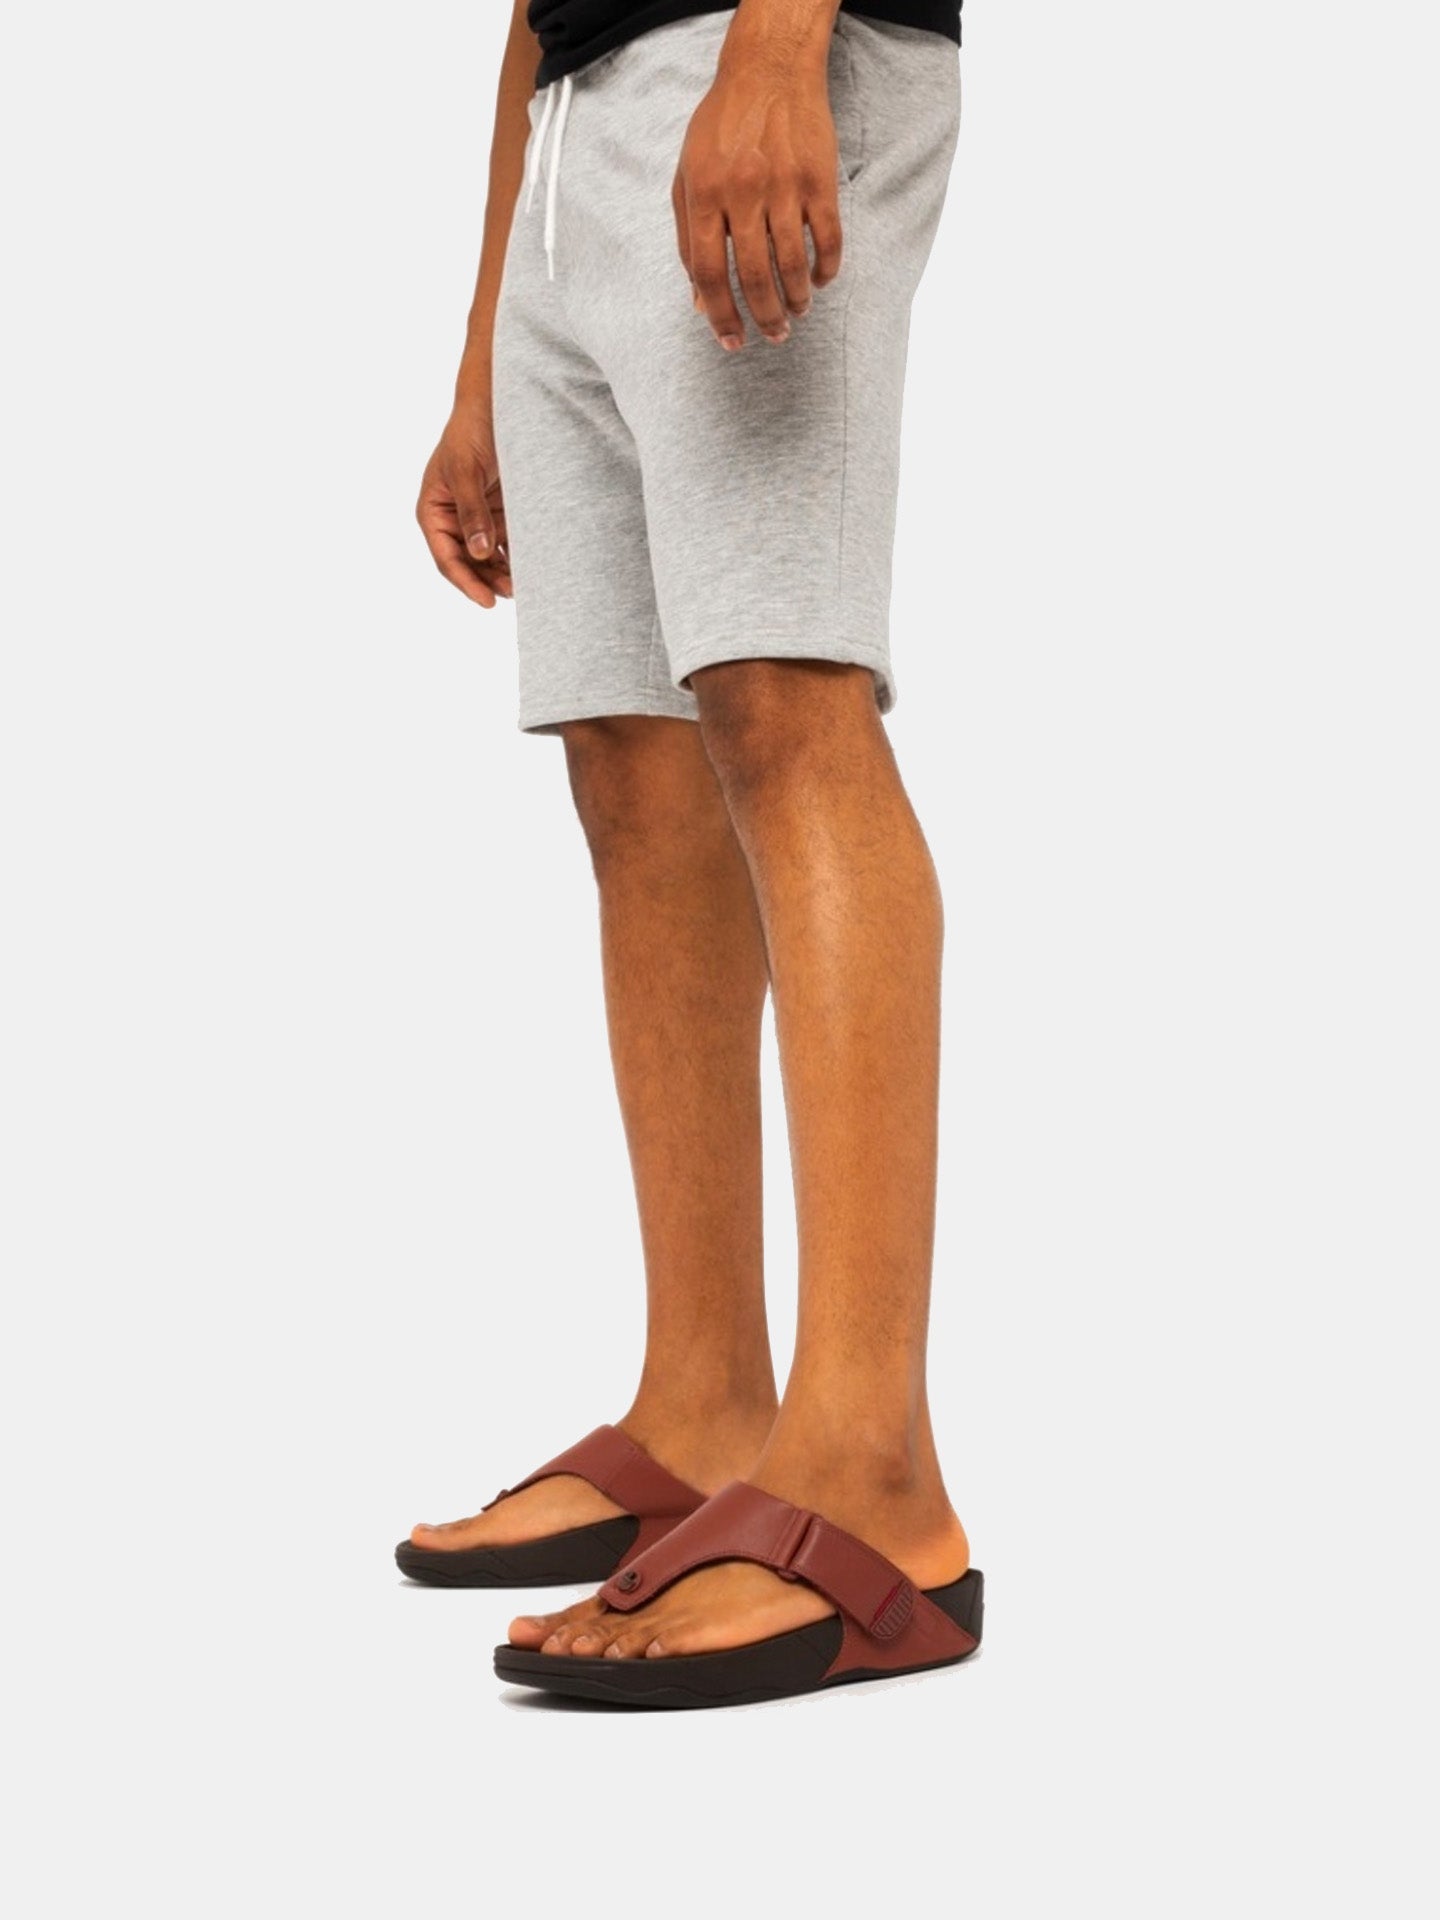 Fitflop TRAKK II Men's Leather Toe-Post Sandals #color_Brown